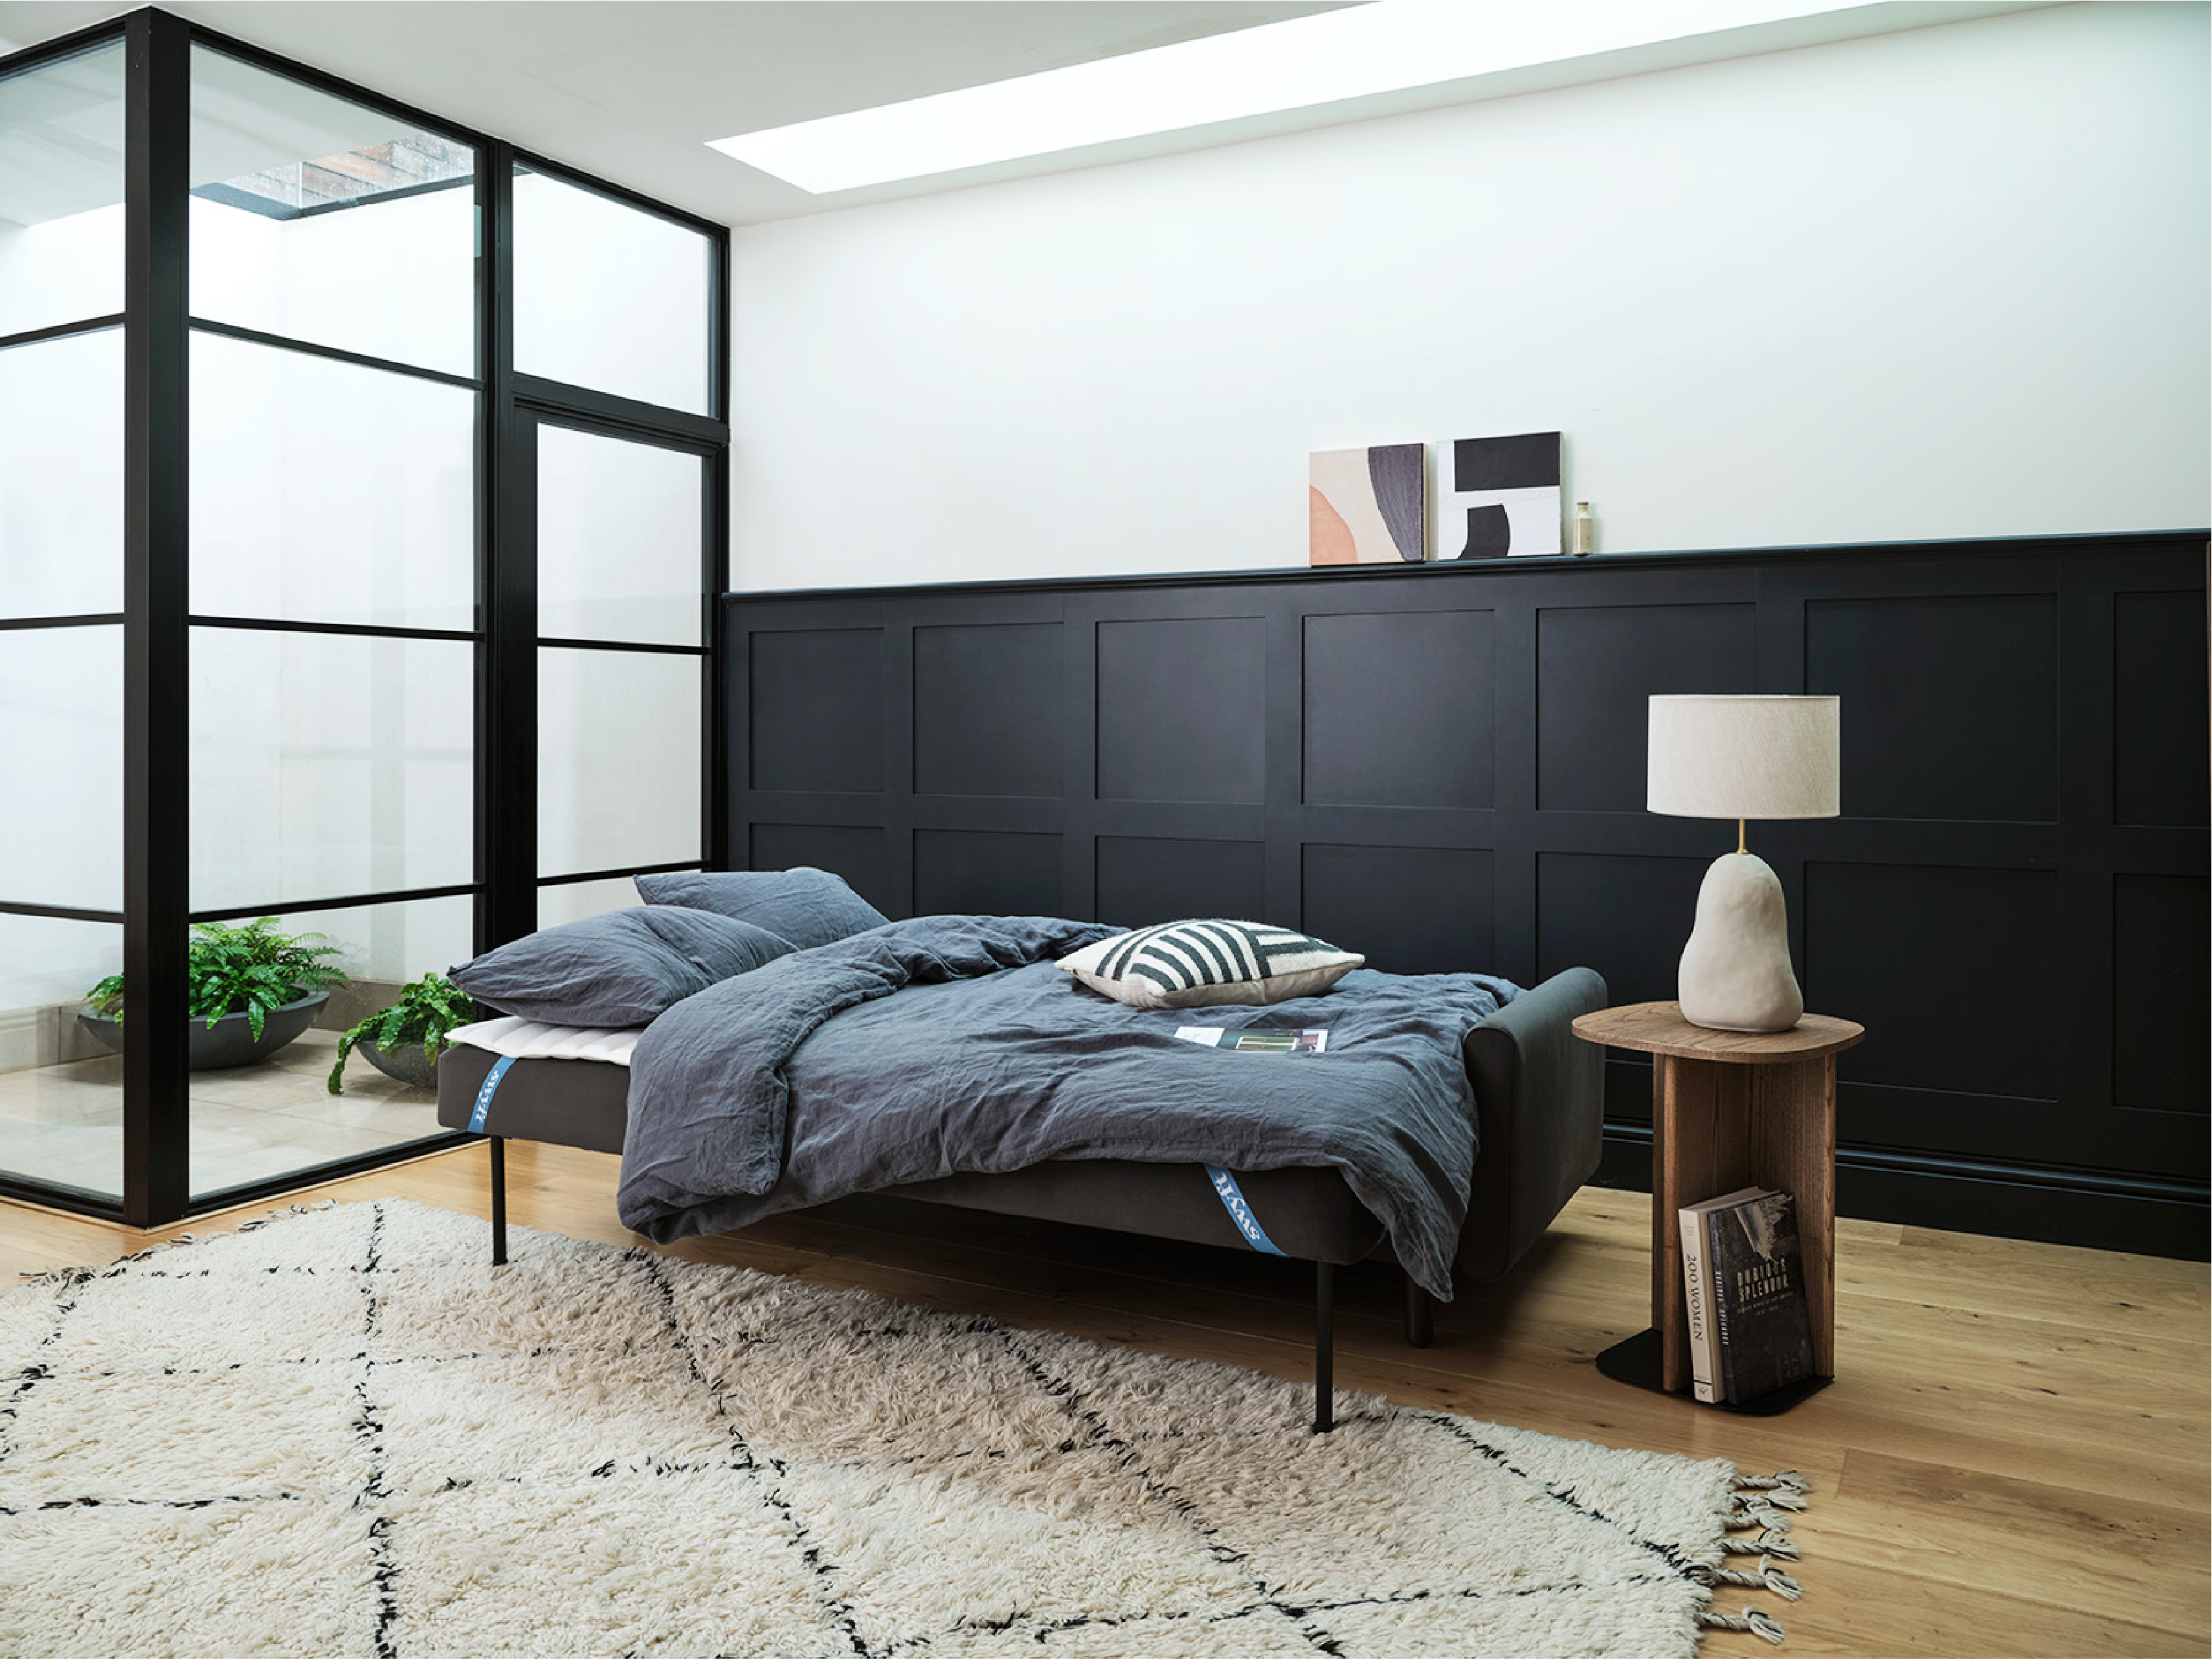 Black sofa bed